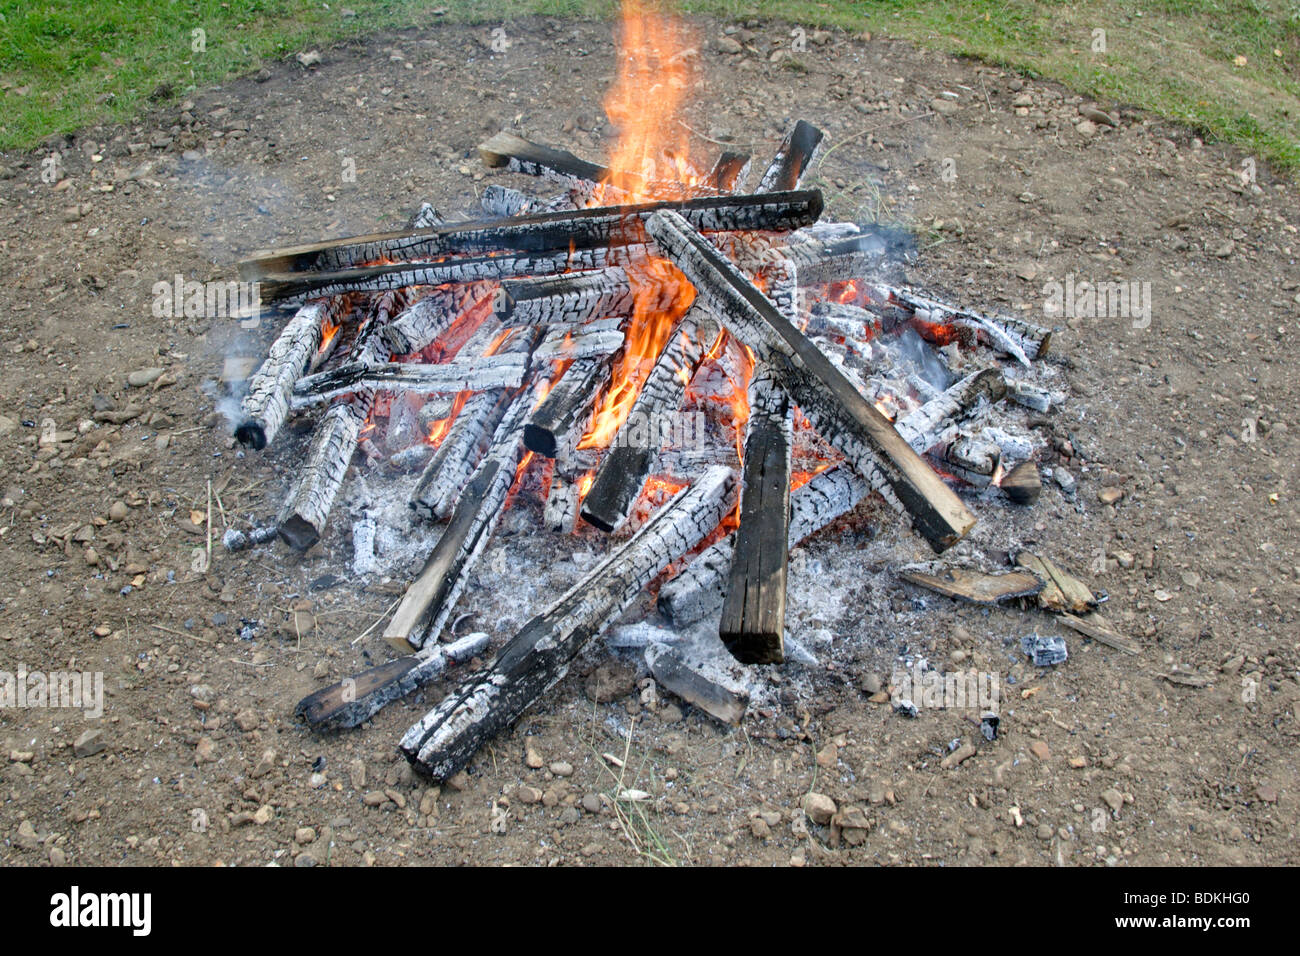 Bonfire in garden, England, UK Stock Photo - Alamy